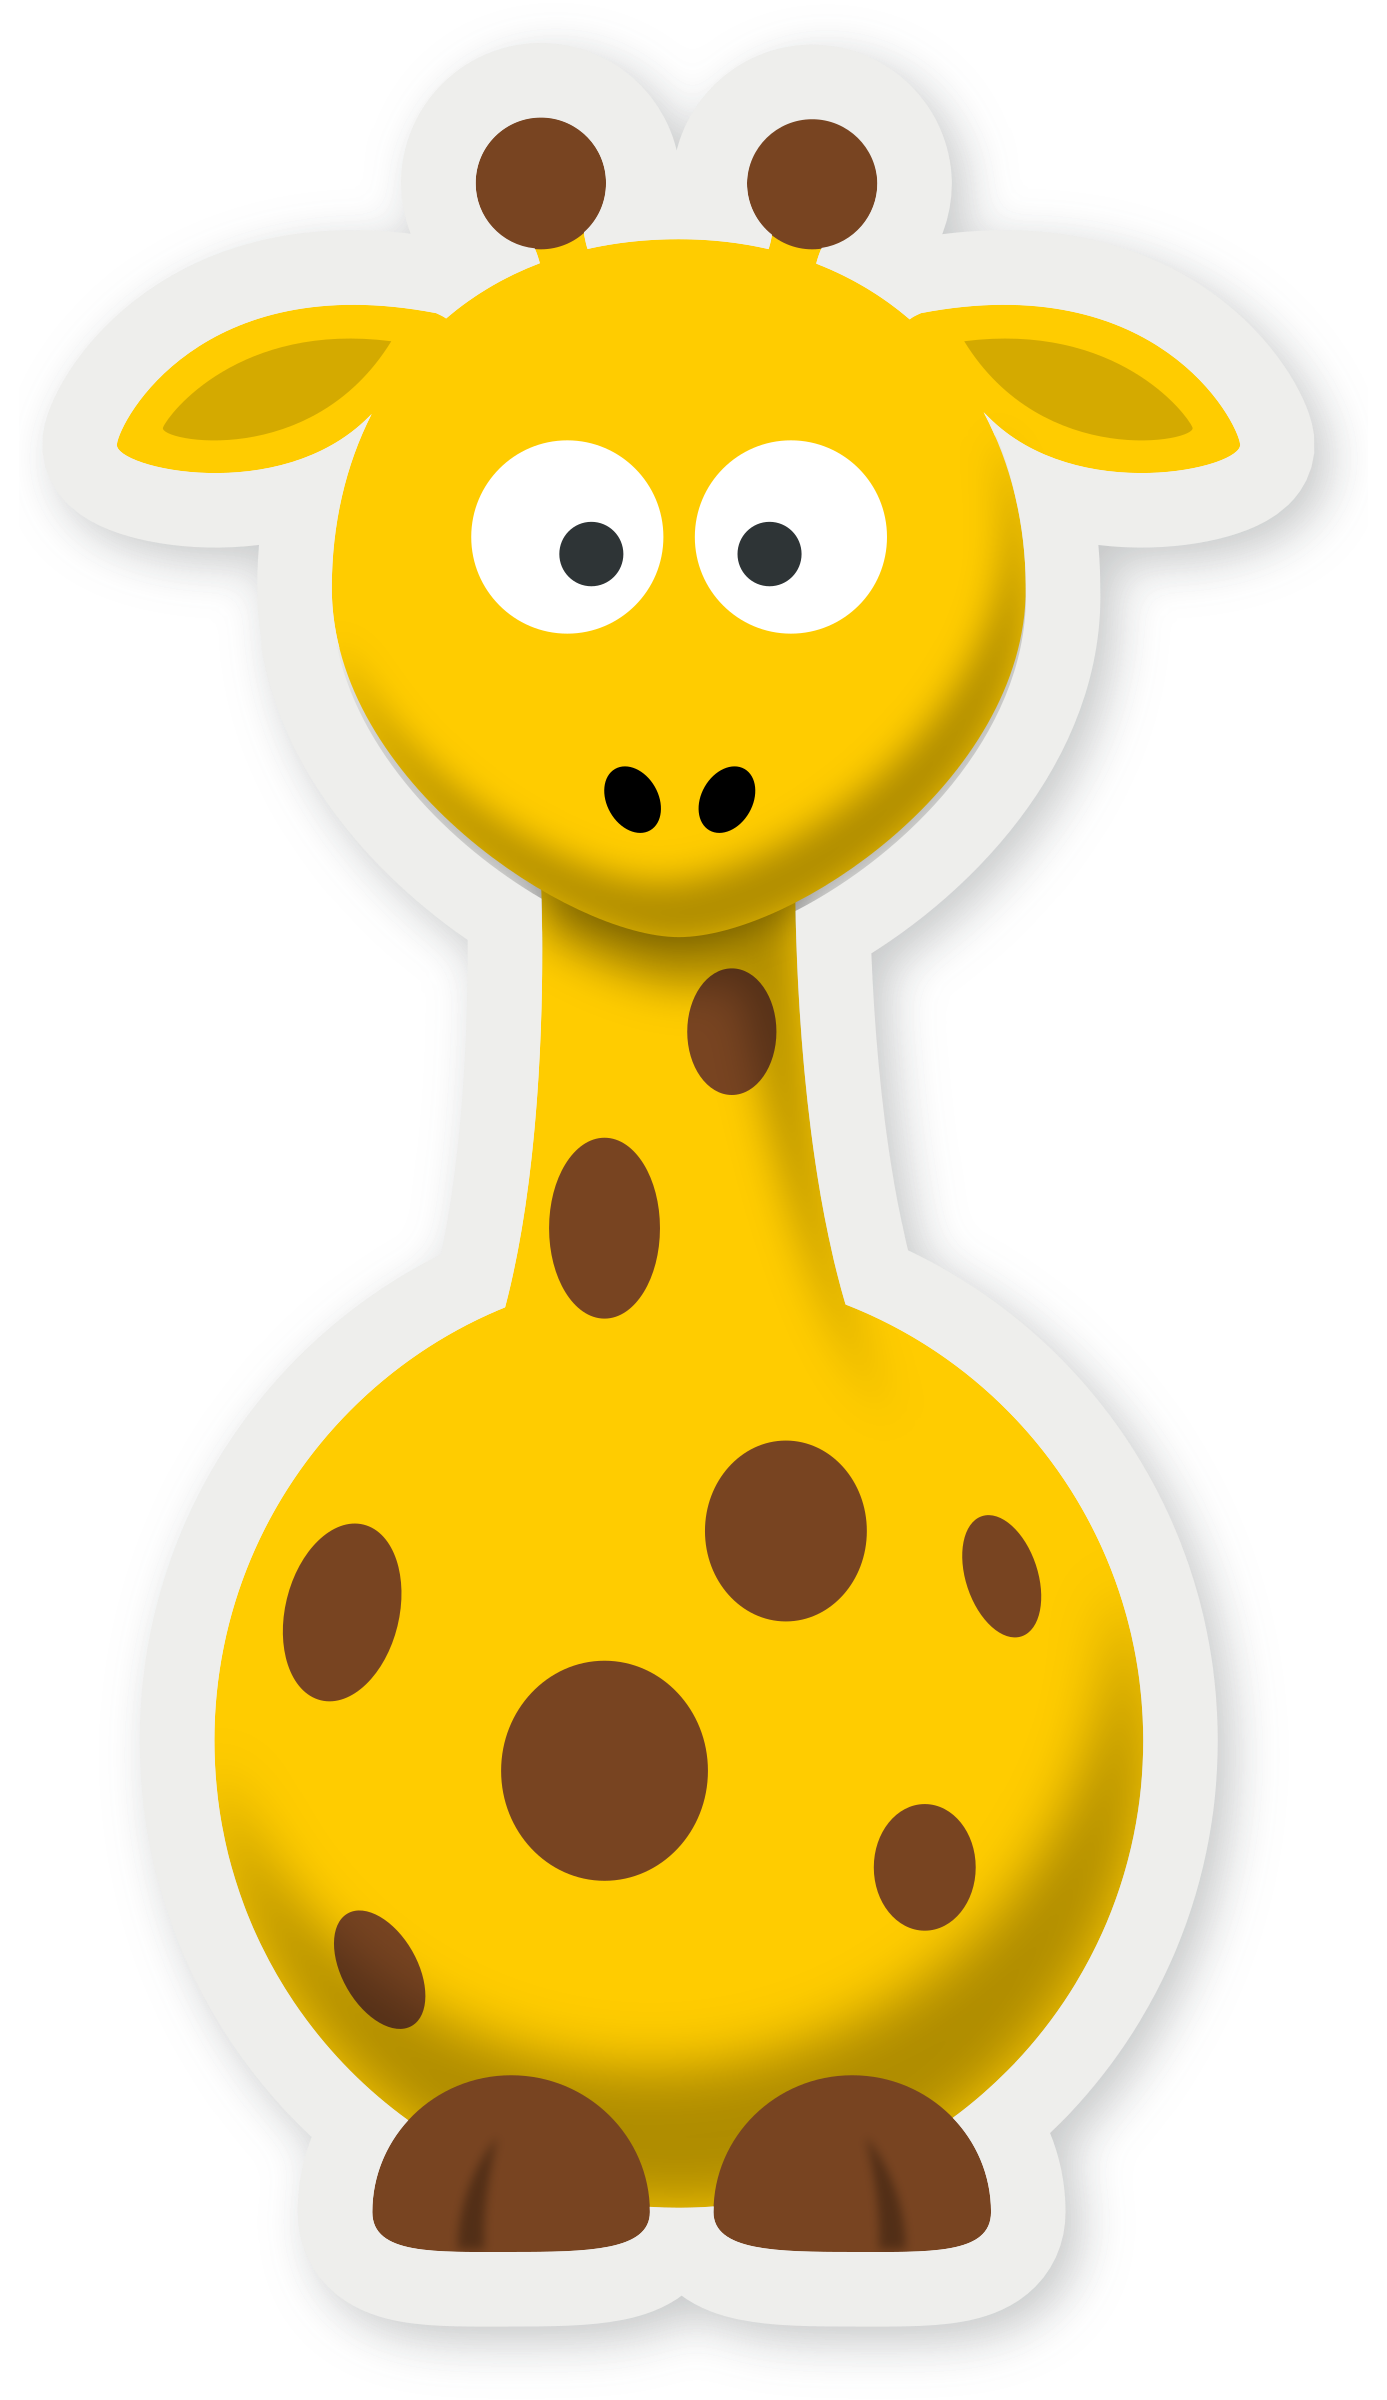 Cartoon Giraffe Vector Art image - Free stock photo ...